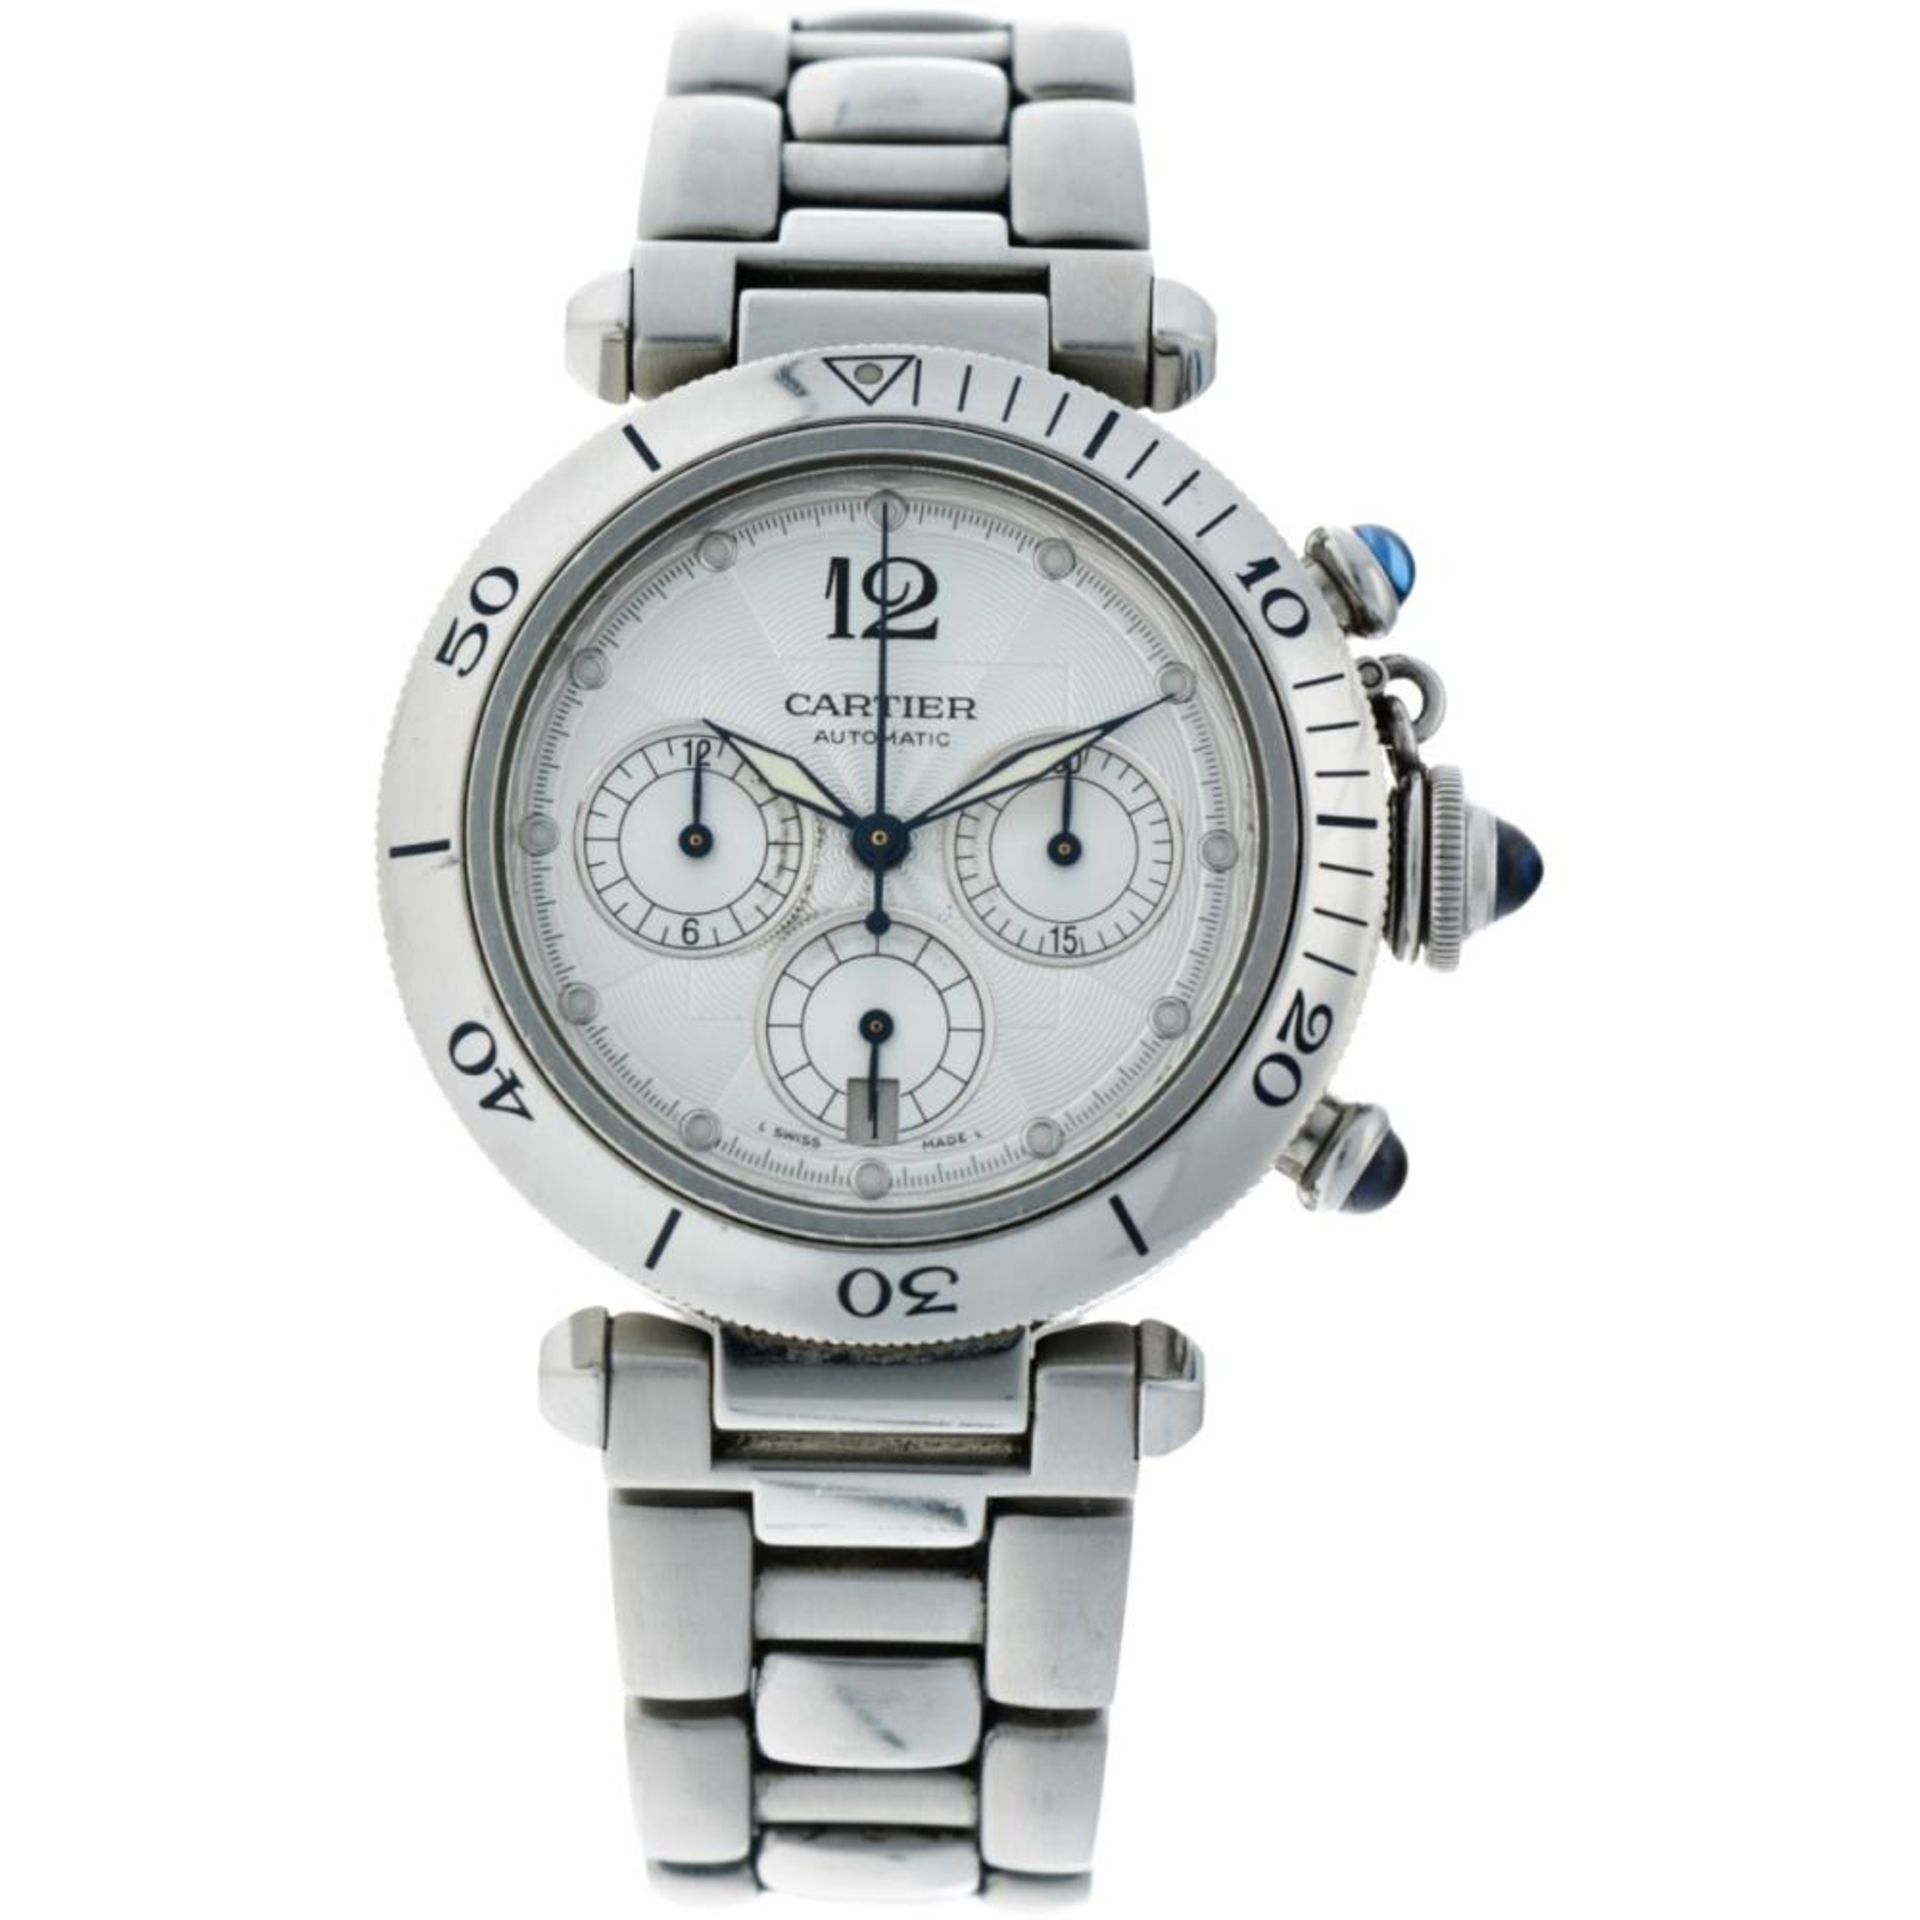 Cartier Pasha 2113 - Men's watch - approx. 2010. - Image 2 of 12